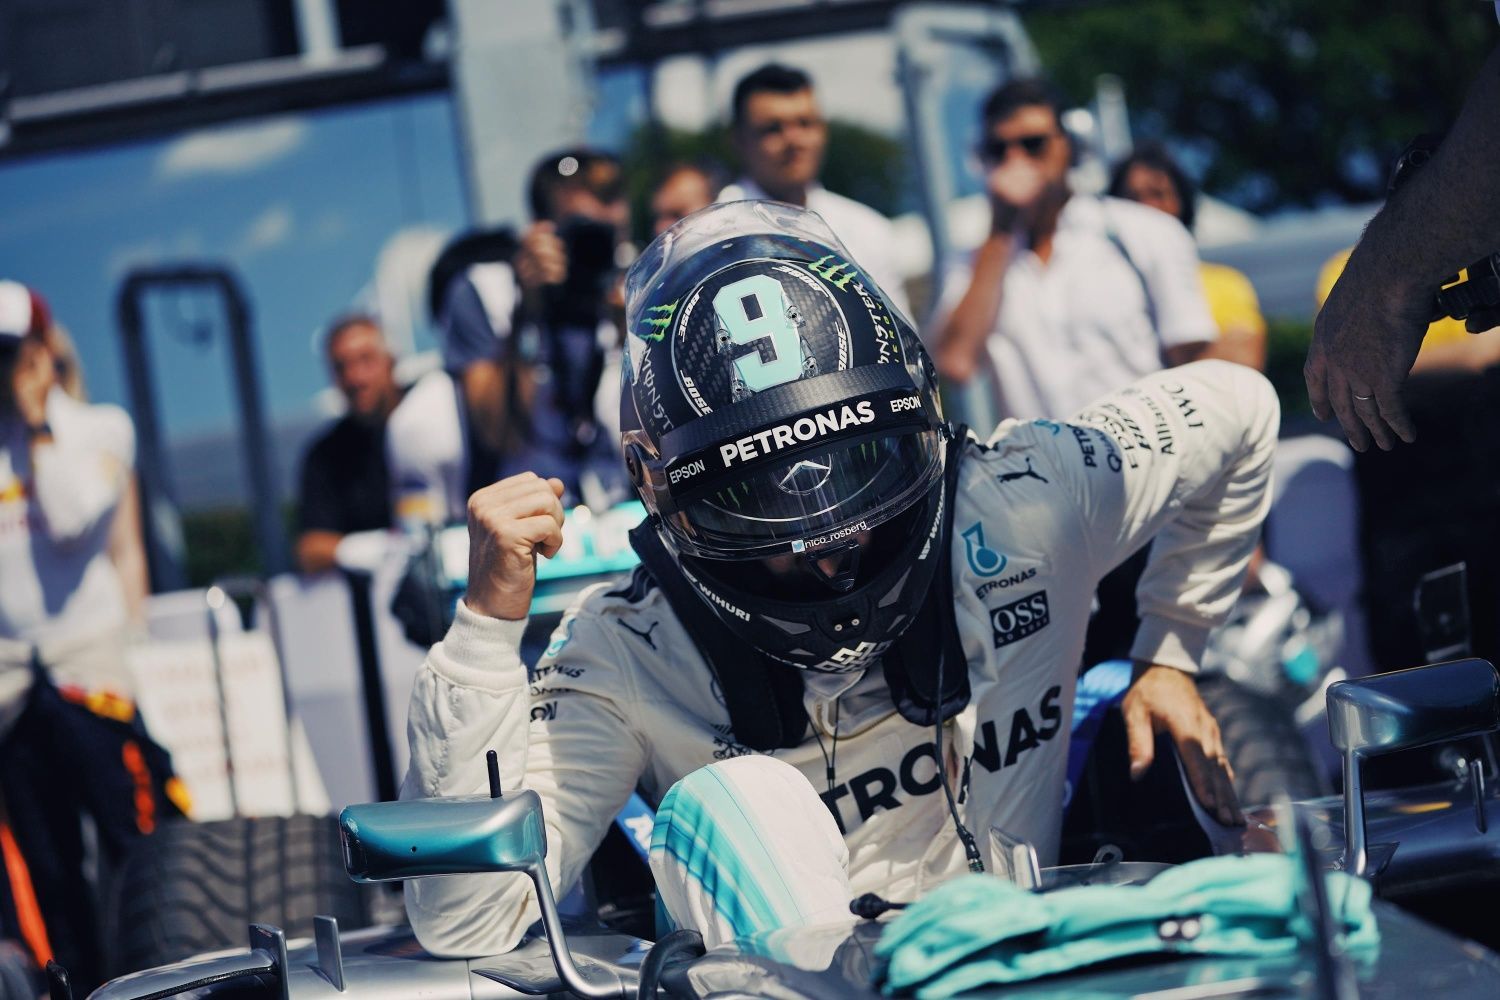 Goodwood Festival of Speed 2017: Nico Rosberg, Mercedes